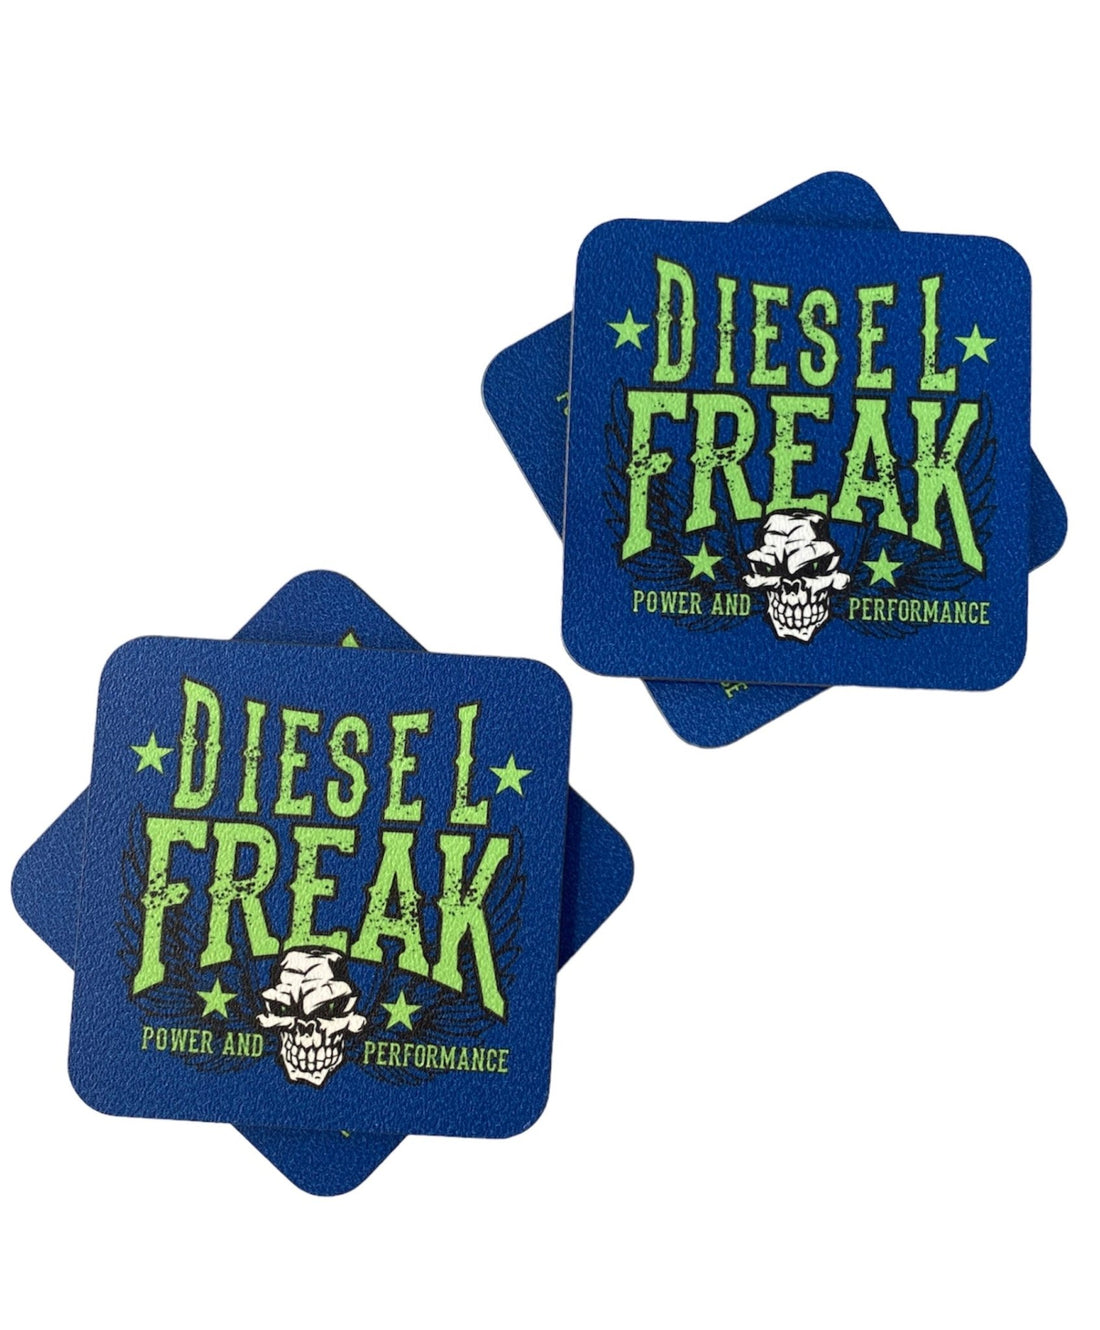 Power and Performance Textured Coaster - Diesel Freak